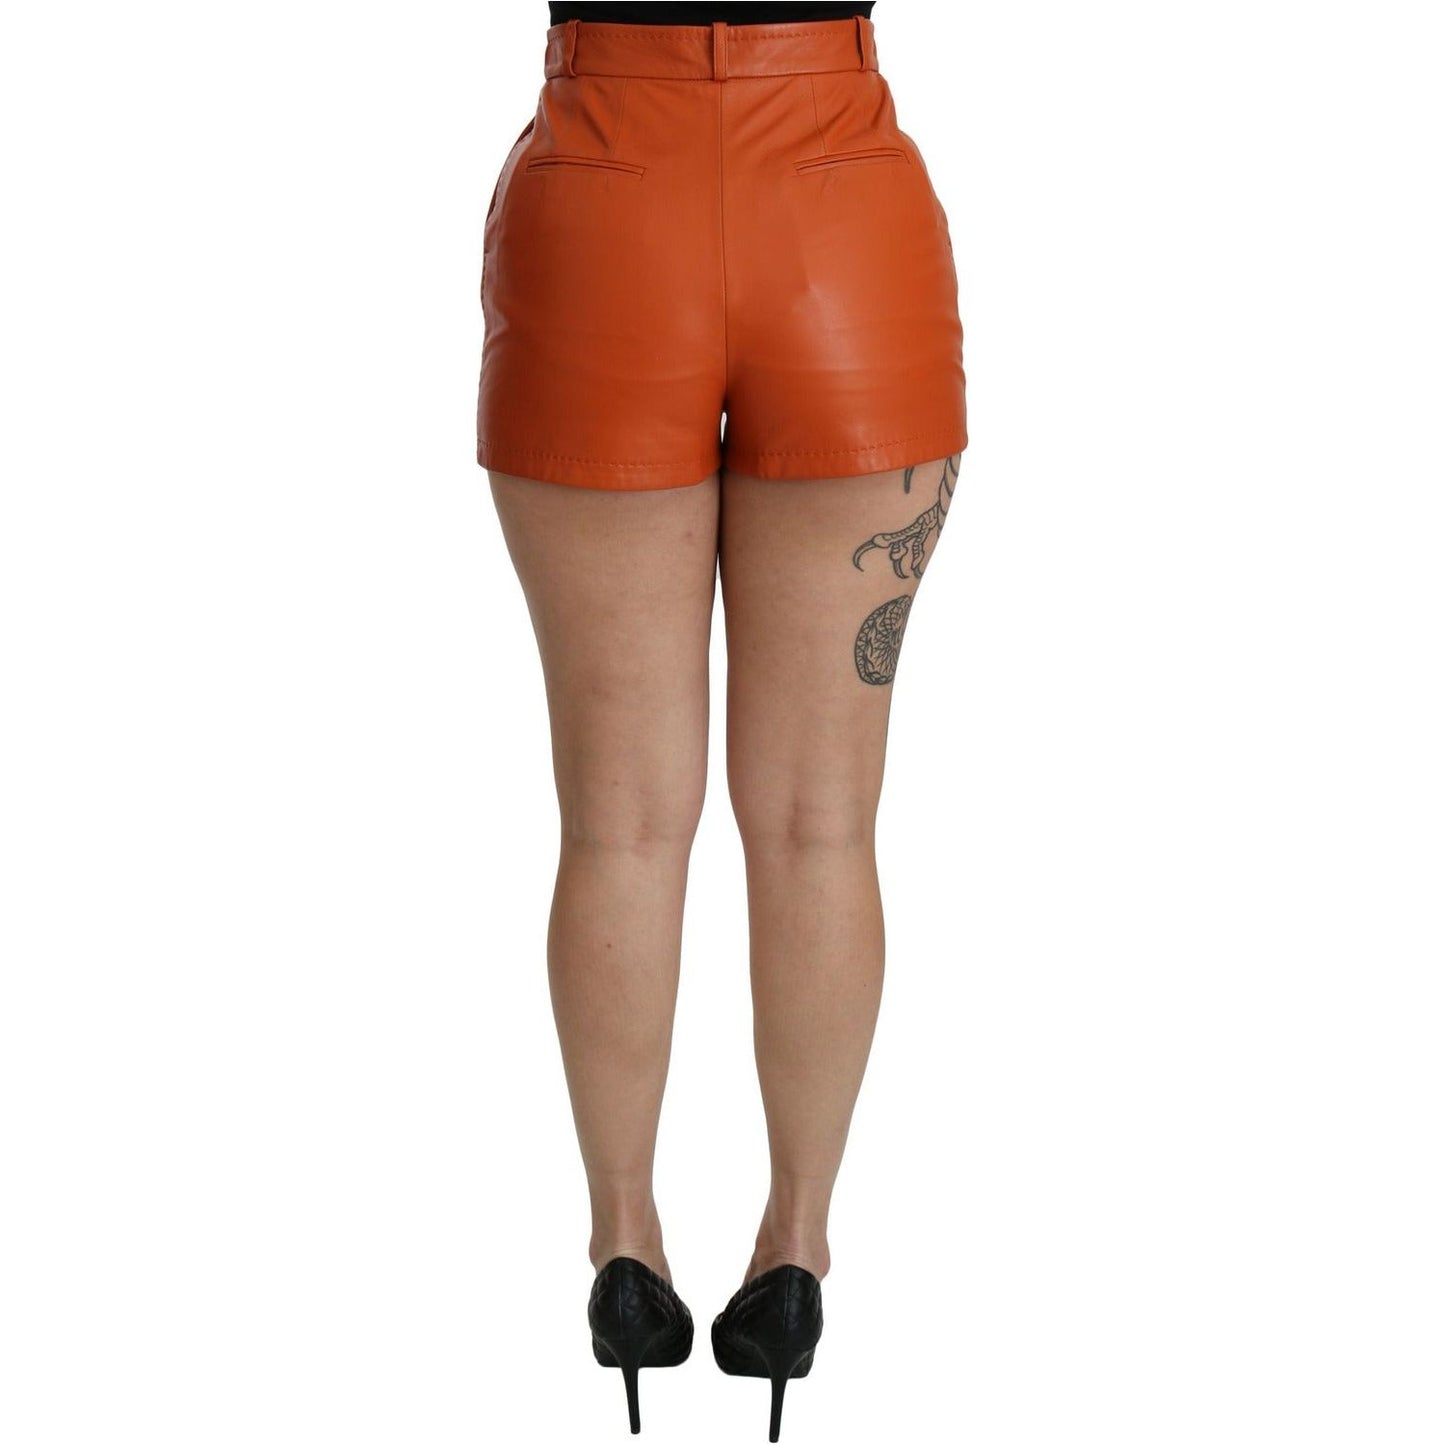 Dolce & Gabbana Chic Orange Leather High Waist Hot Pants Shorts orange-leather-high-waist-hot-pants-shorts IMG_2964-2-scaled-25970163-186.jpg